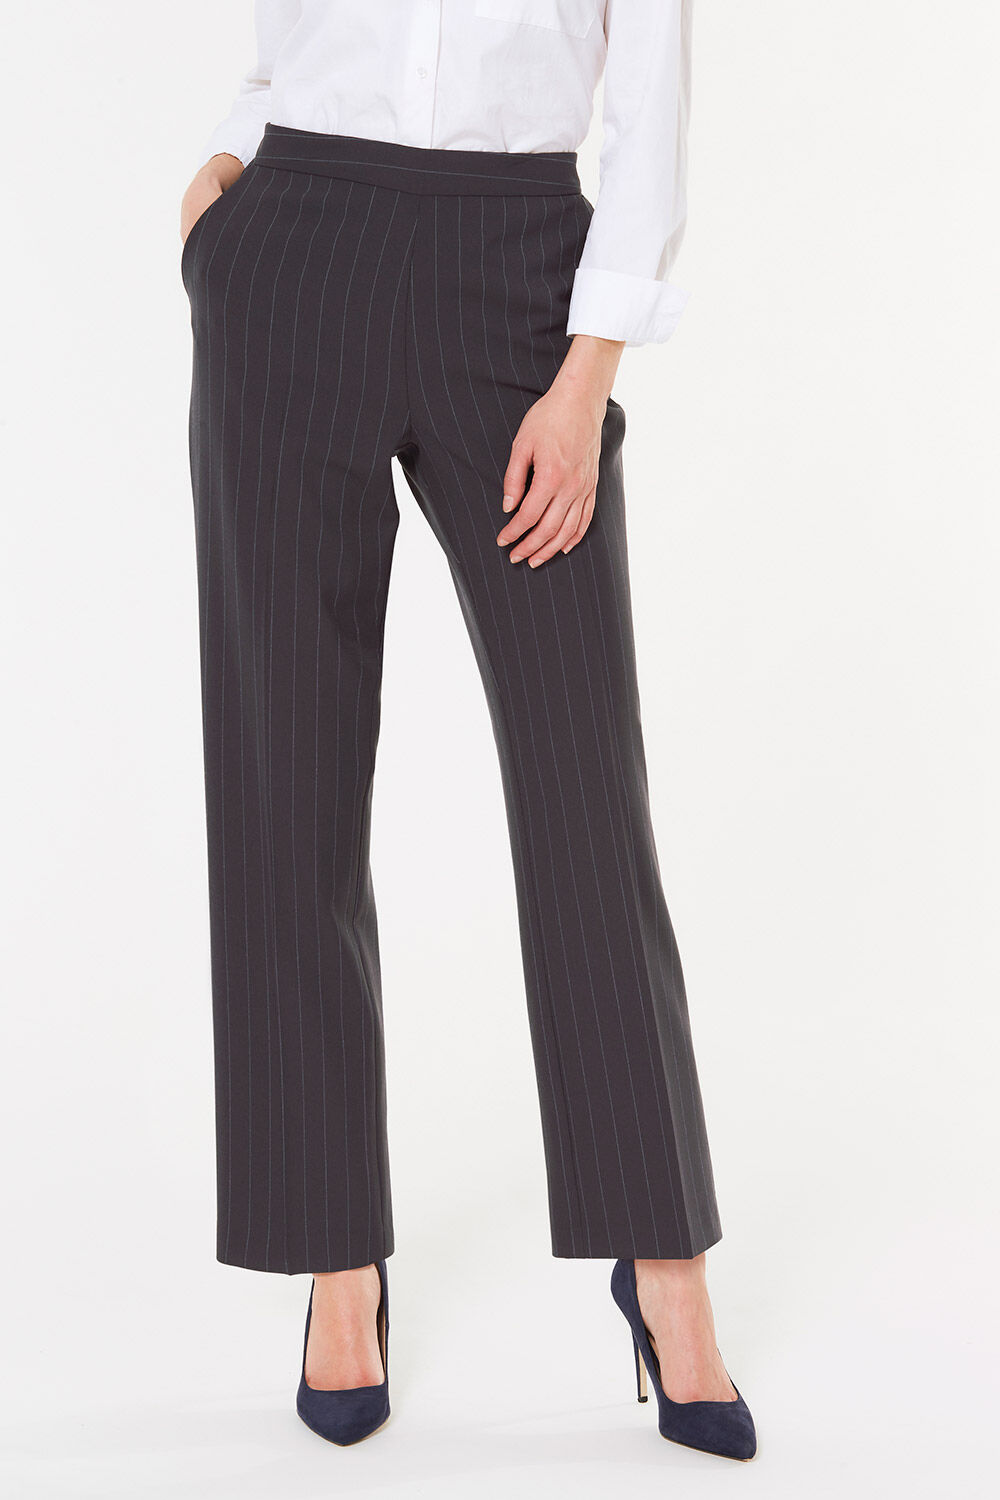 Bonmarche Workwear Classic Straight Leg Stripe Pull On Trouser - Navy, Size: 28